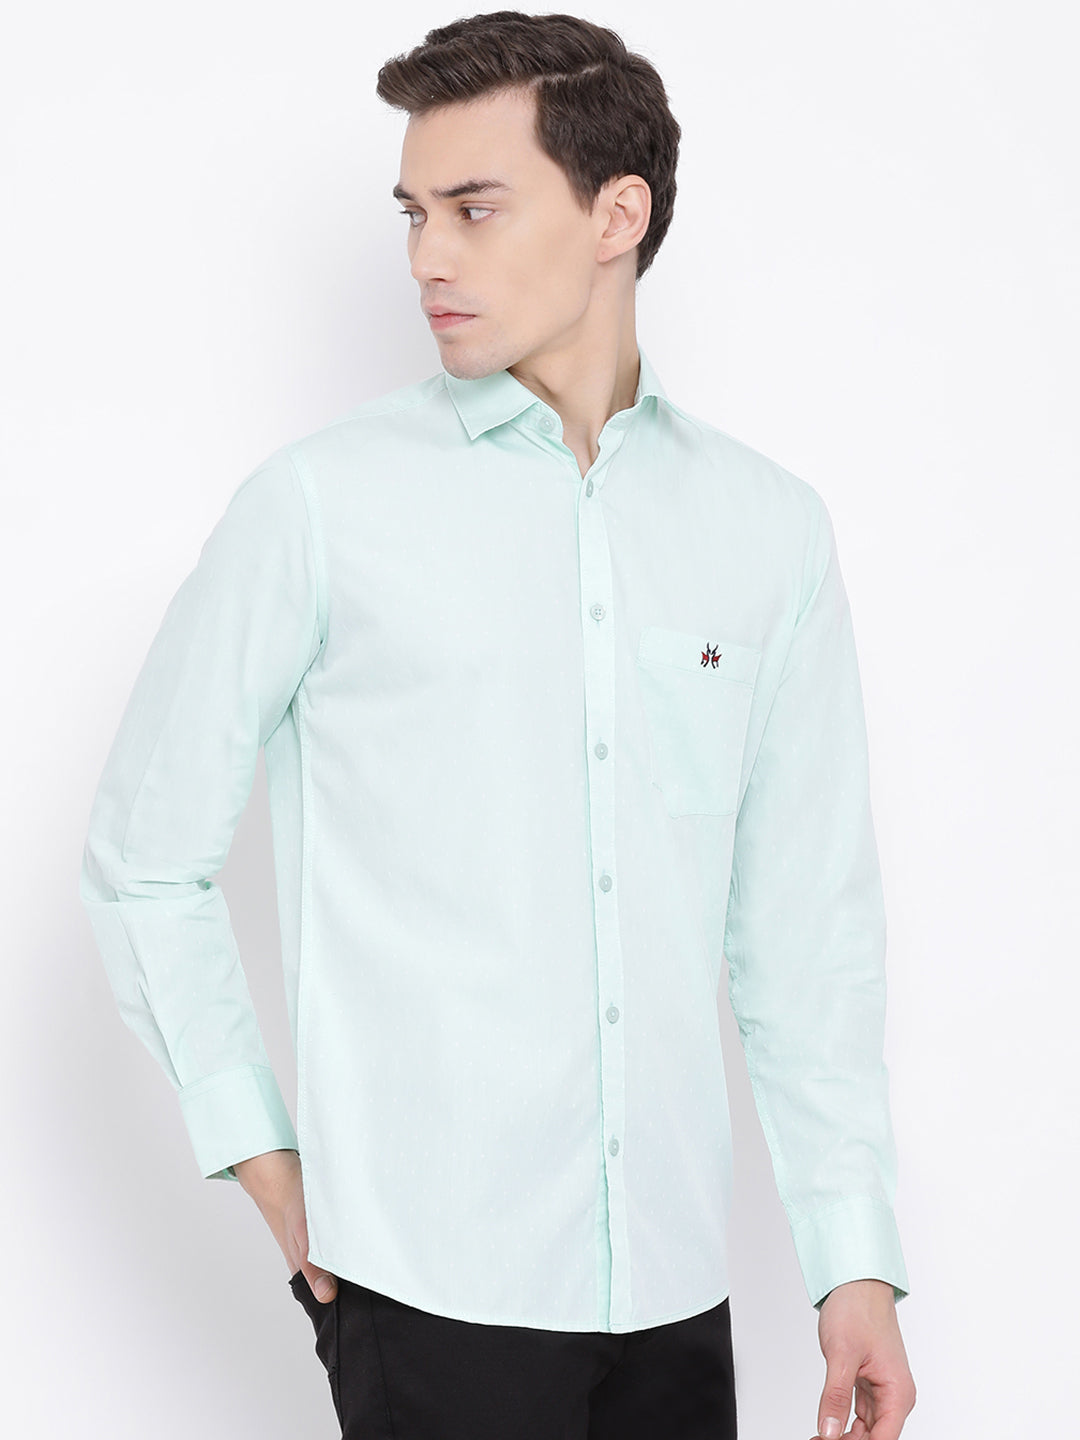 Green Full Sleeves Slim Fit shirt - Men Shirts